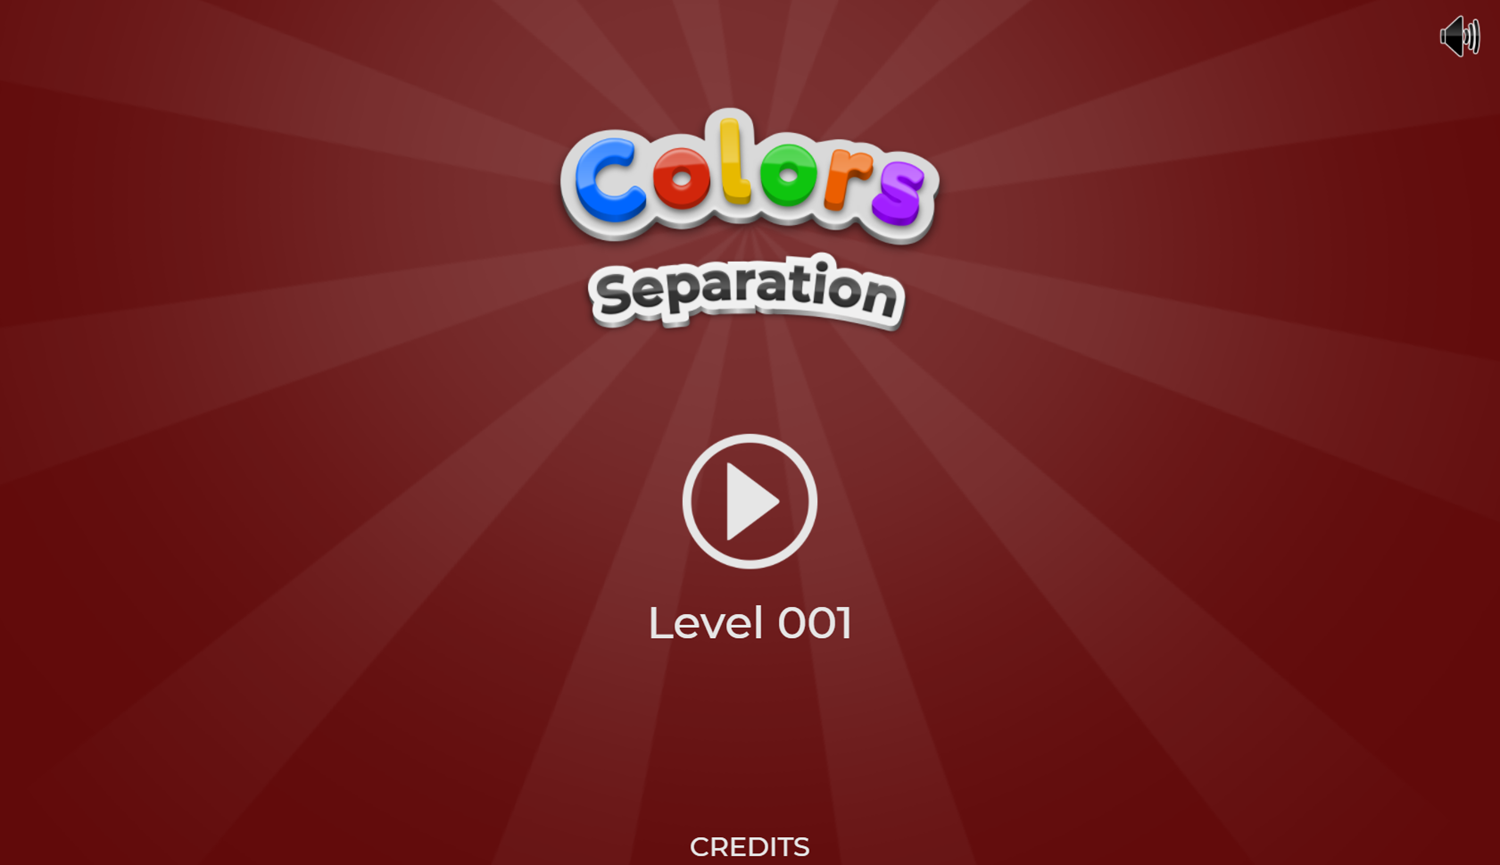 Colors Separation Game Welcome Screen Screenshot.